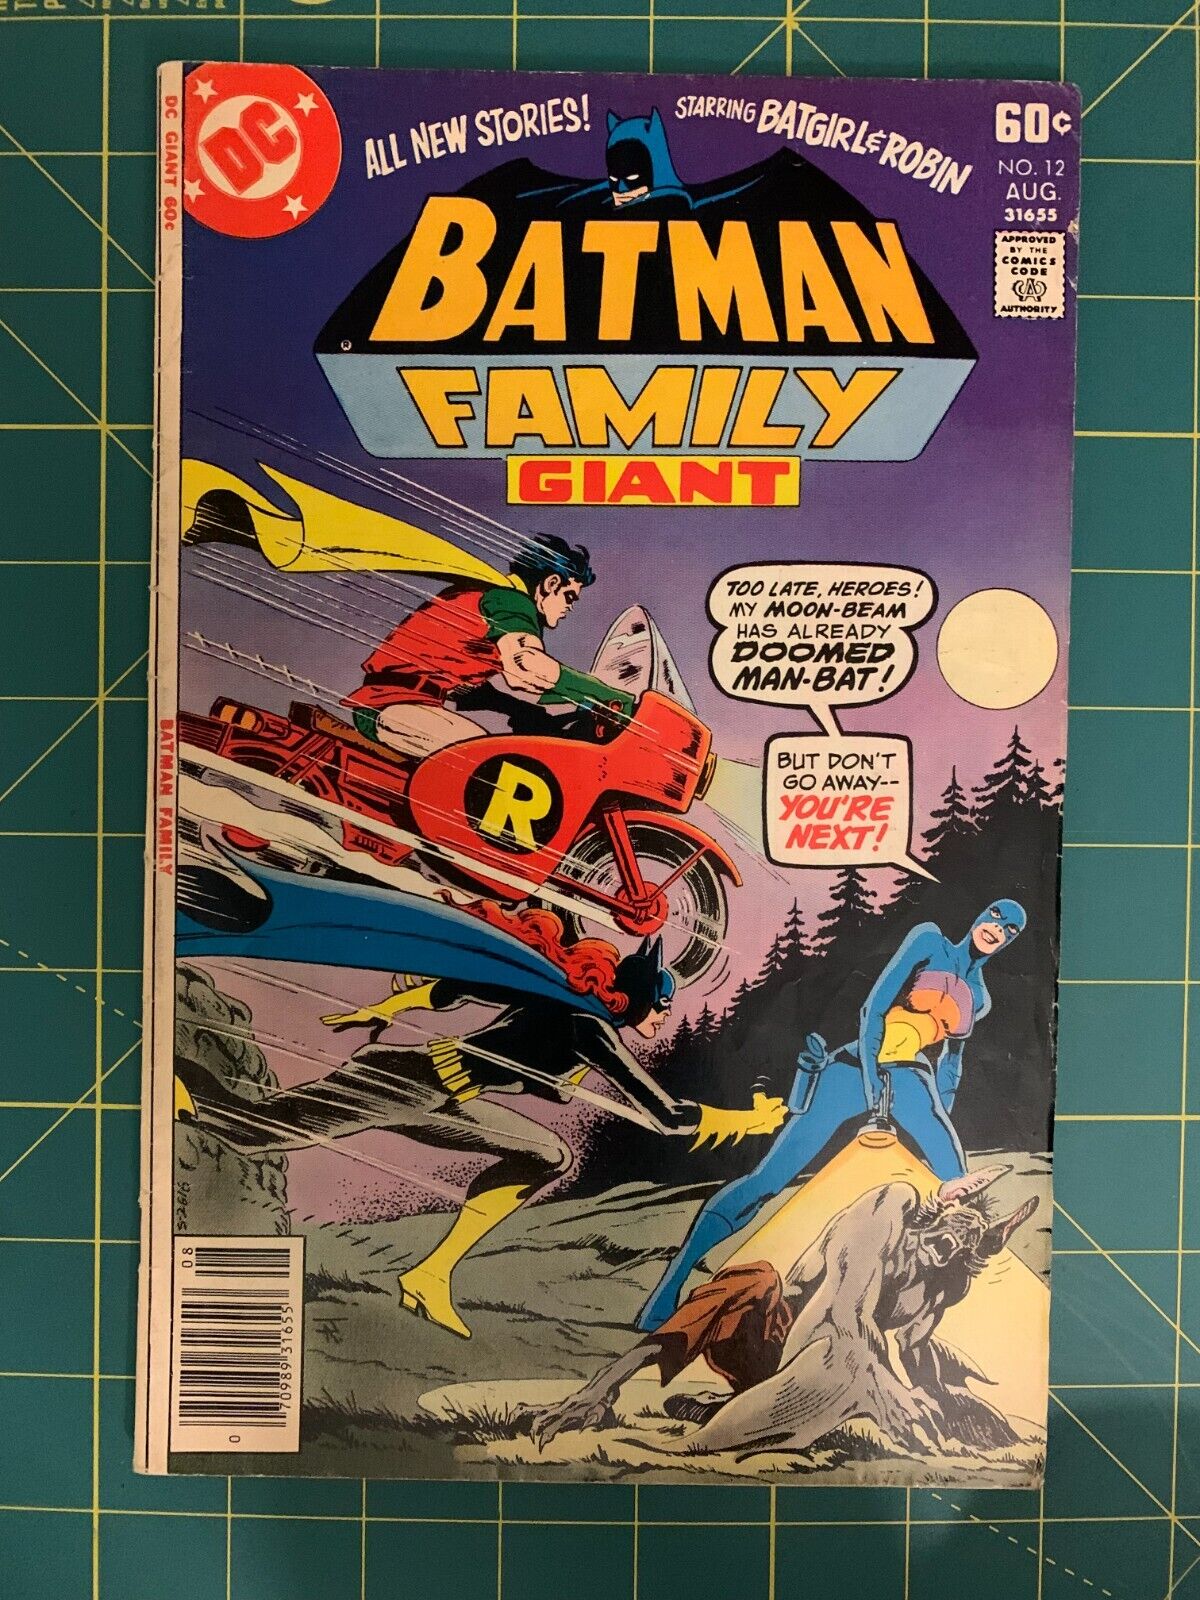 The Batman Family #12 - Aug 1977 - Vol.1 - (187A)